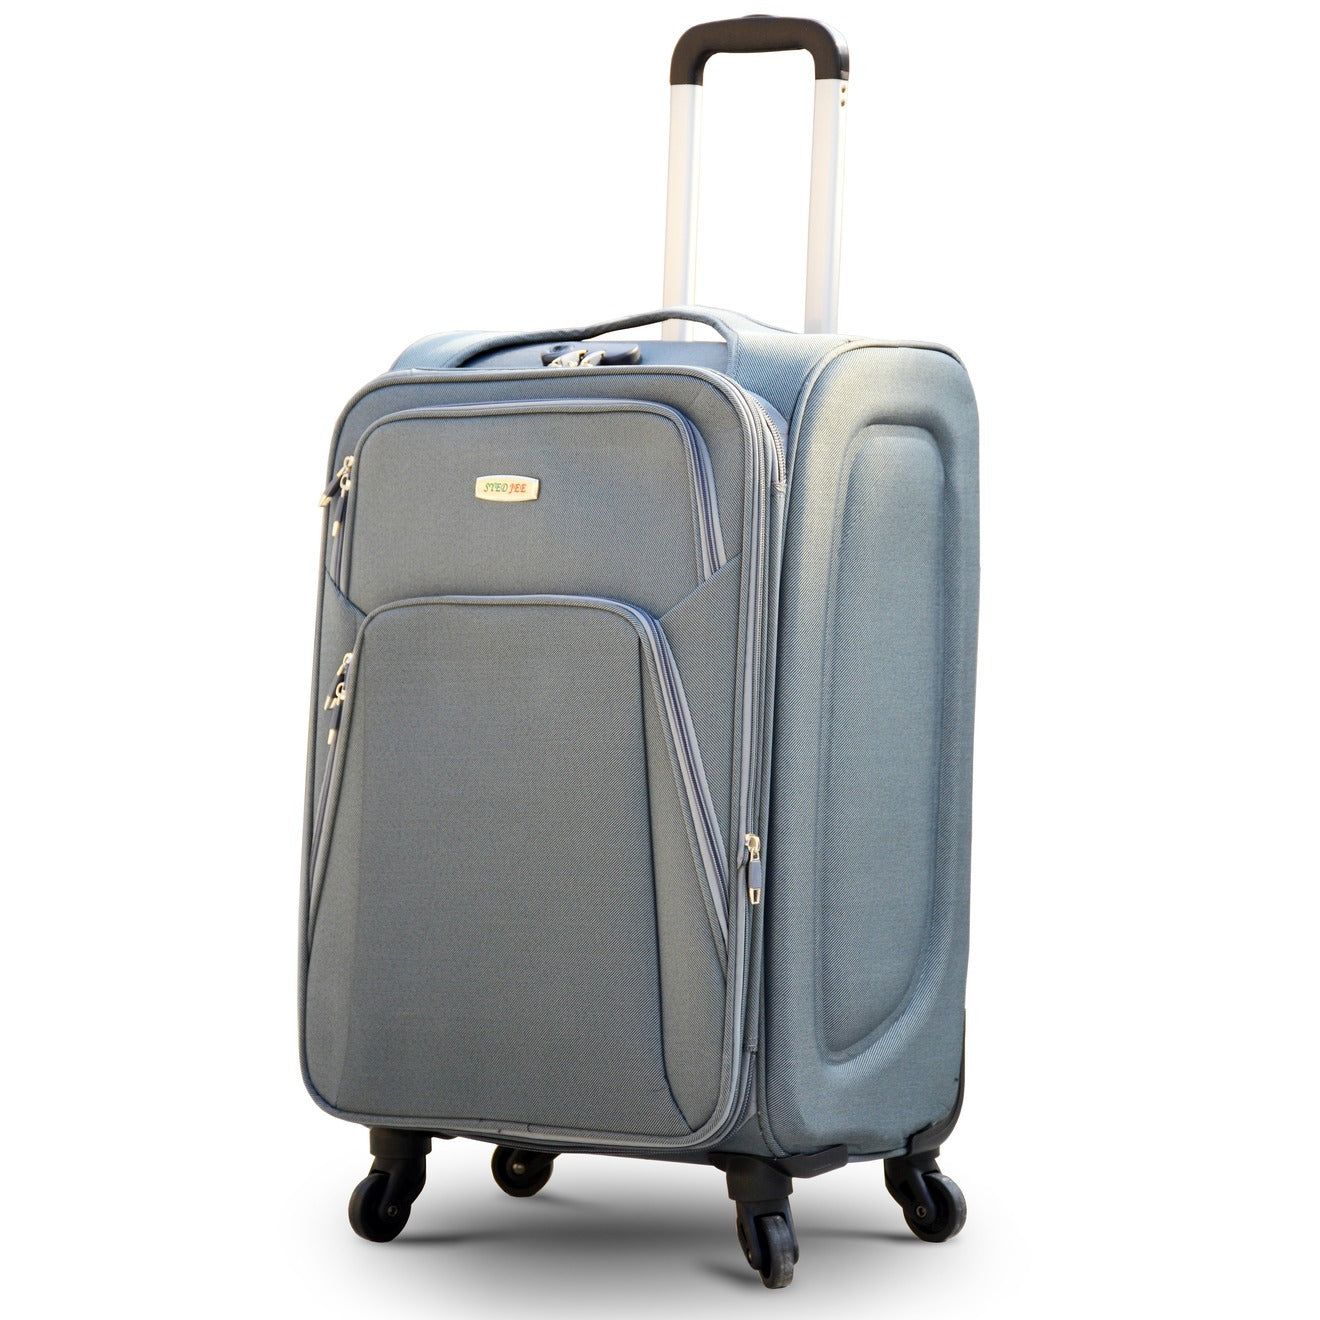 SJ JIAN 4 Wheel Lightweight Soft Material Luggage Bag Zaappy